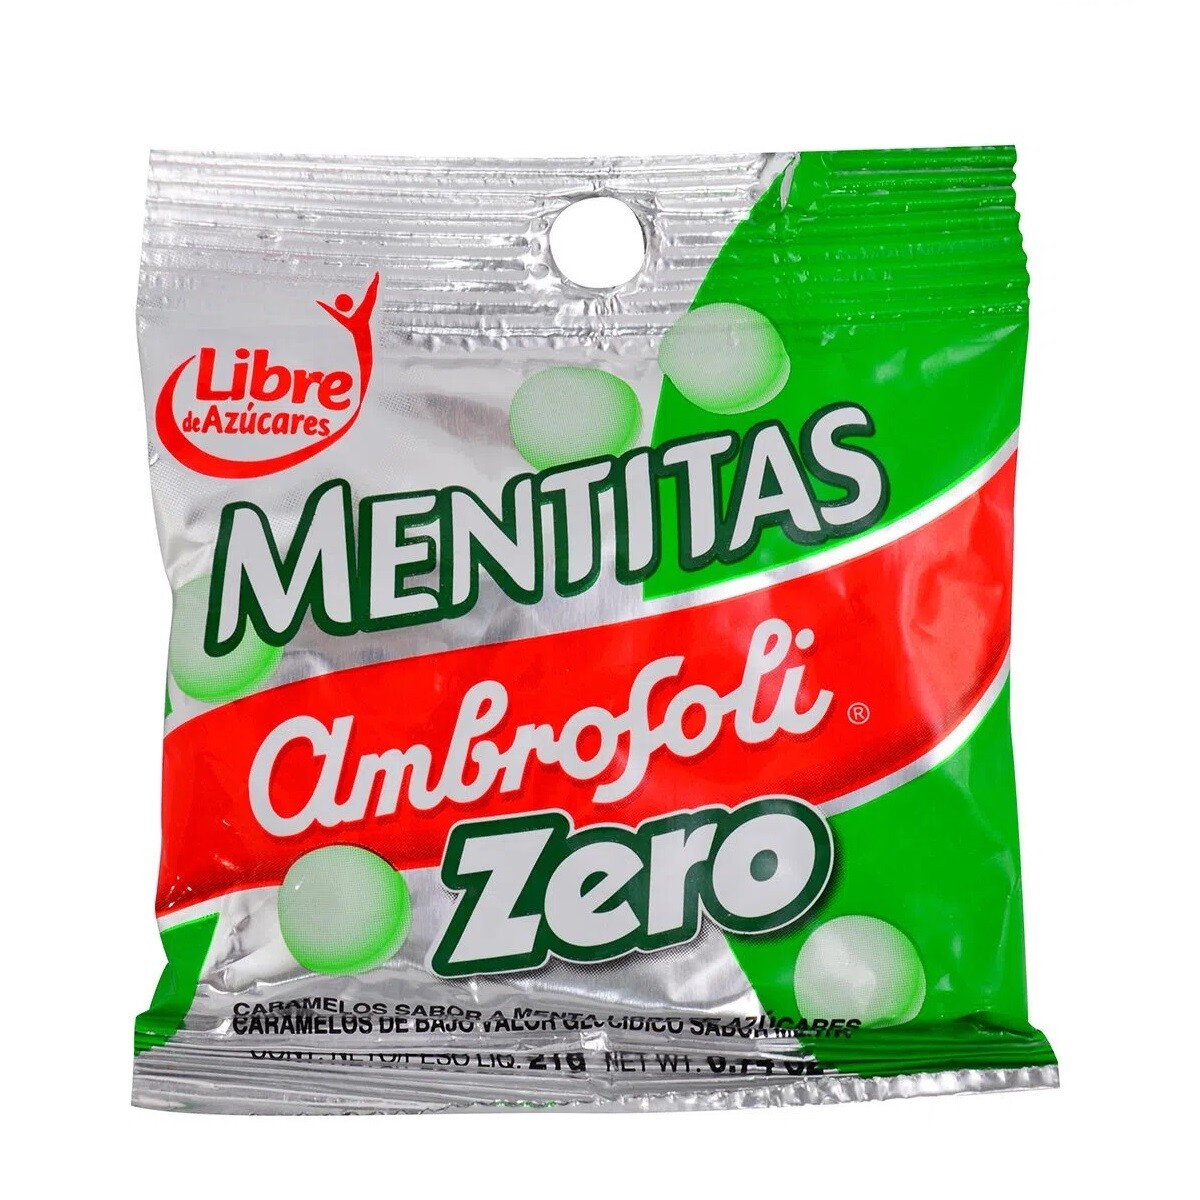 Mentitas Zero 